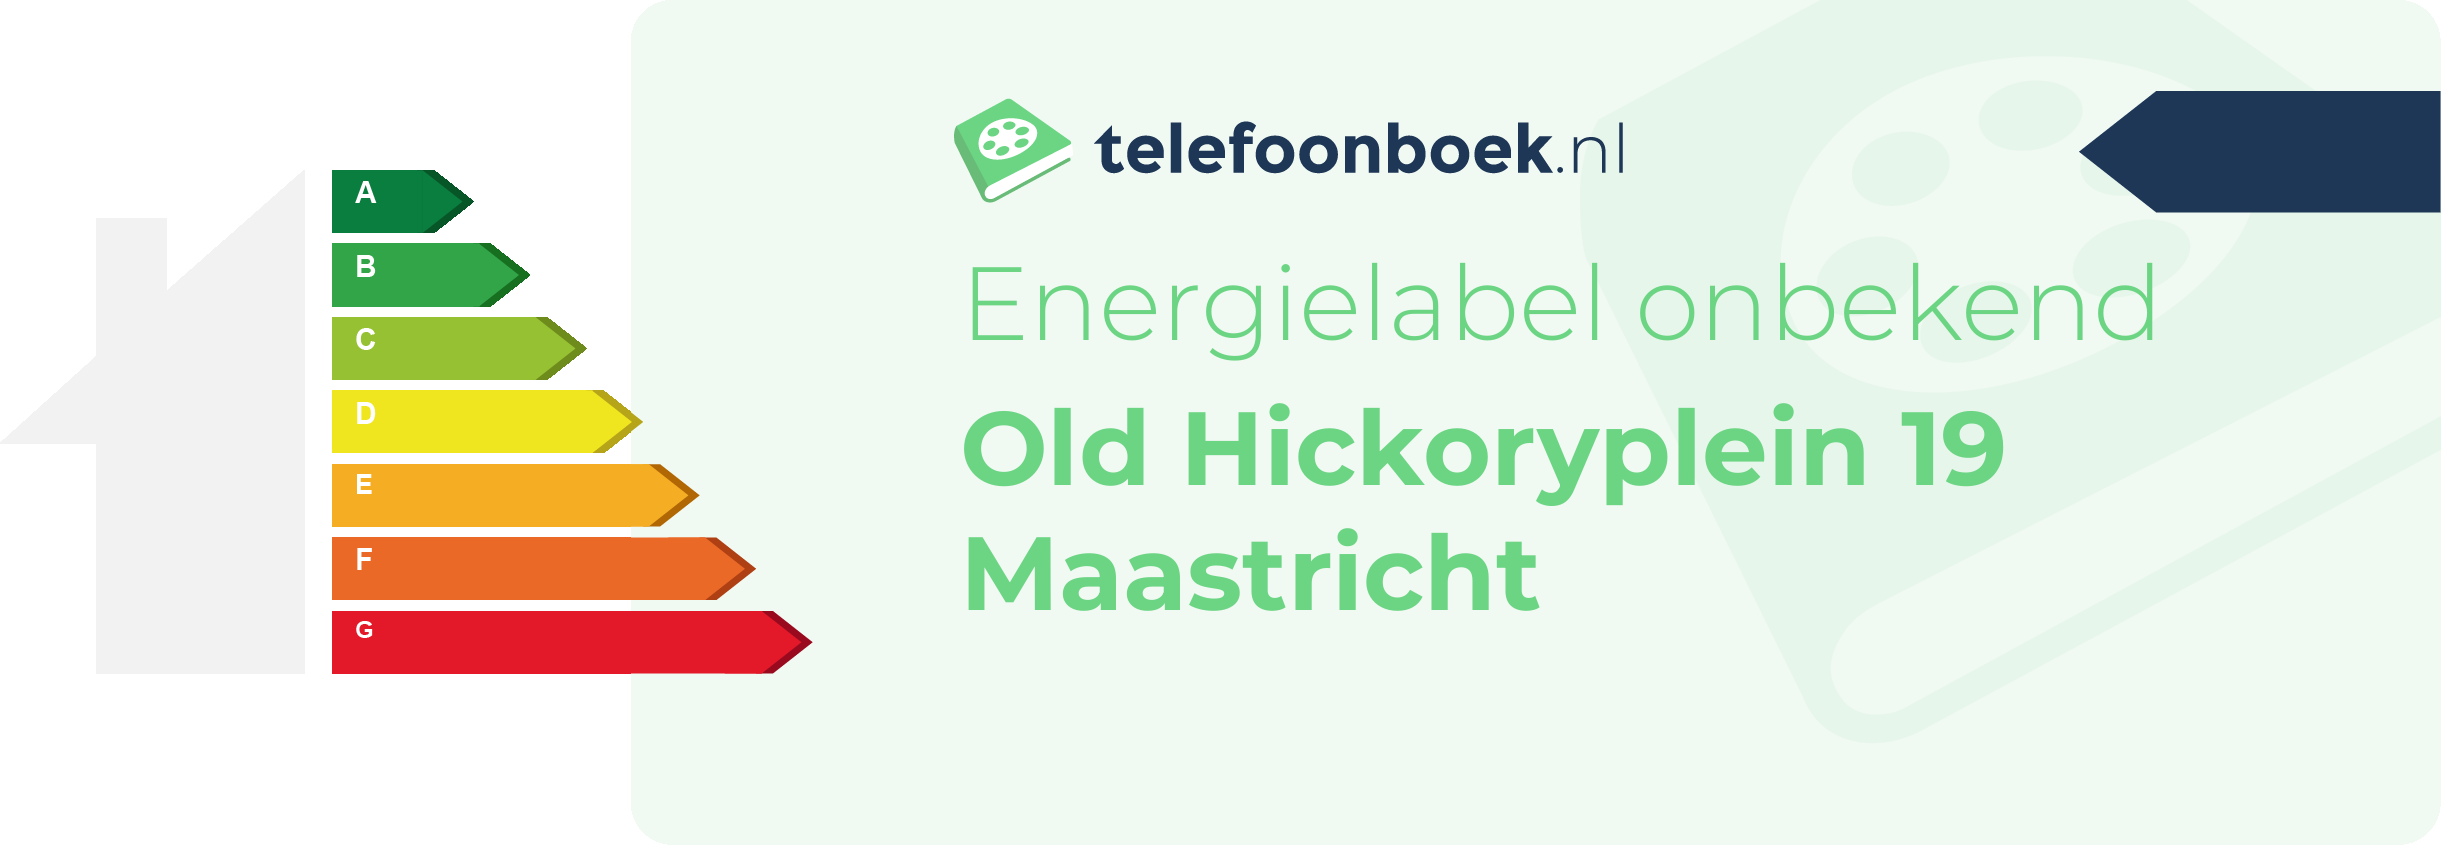 Energielabel Old Hickoryplein 19 Maastricht